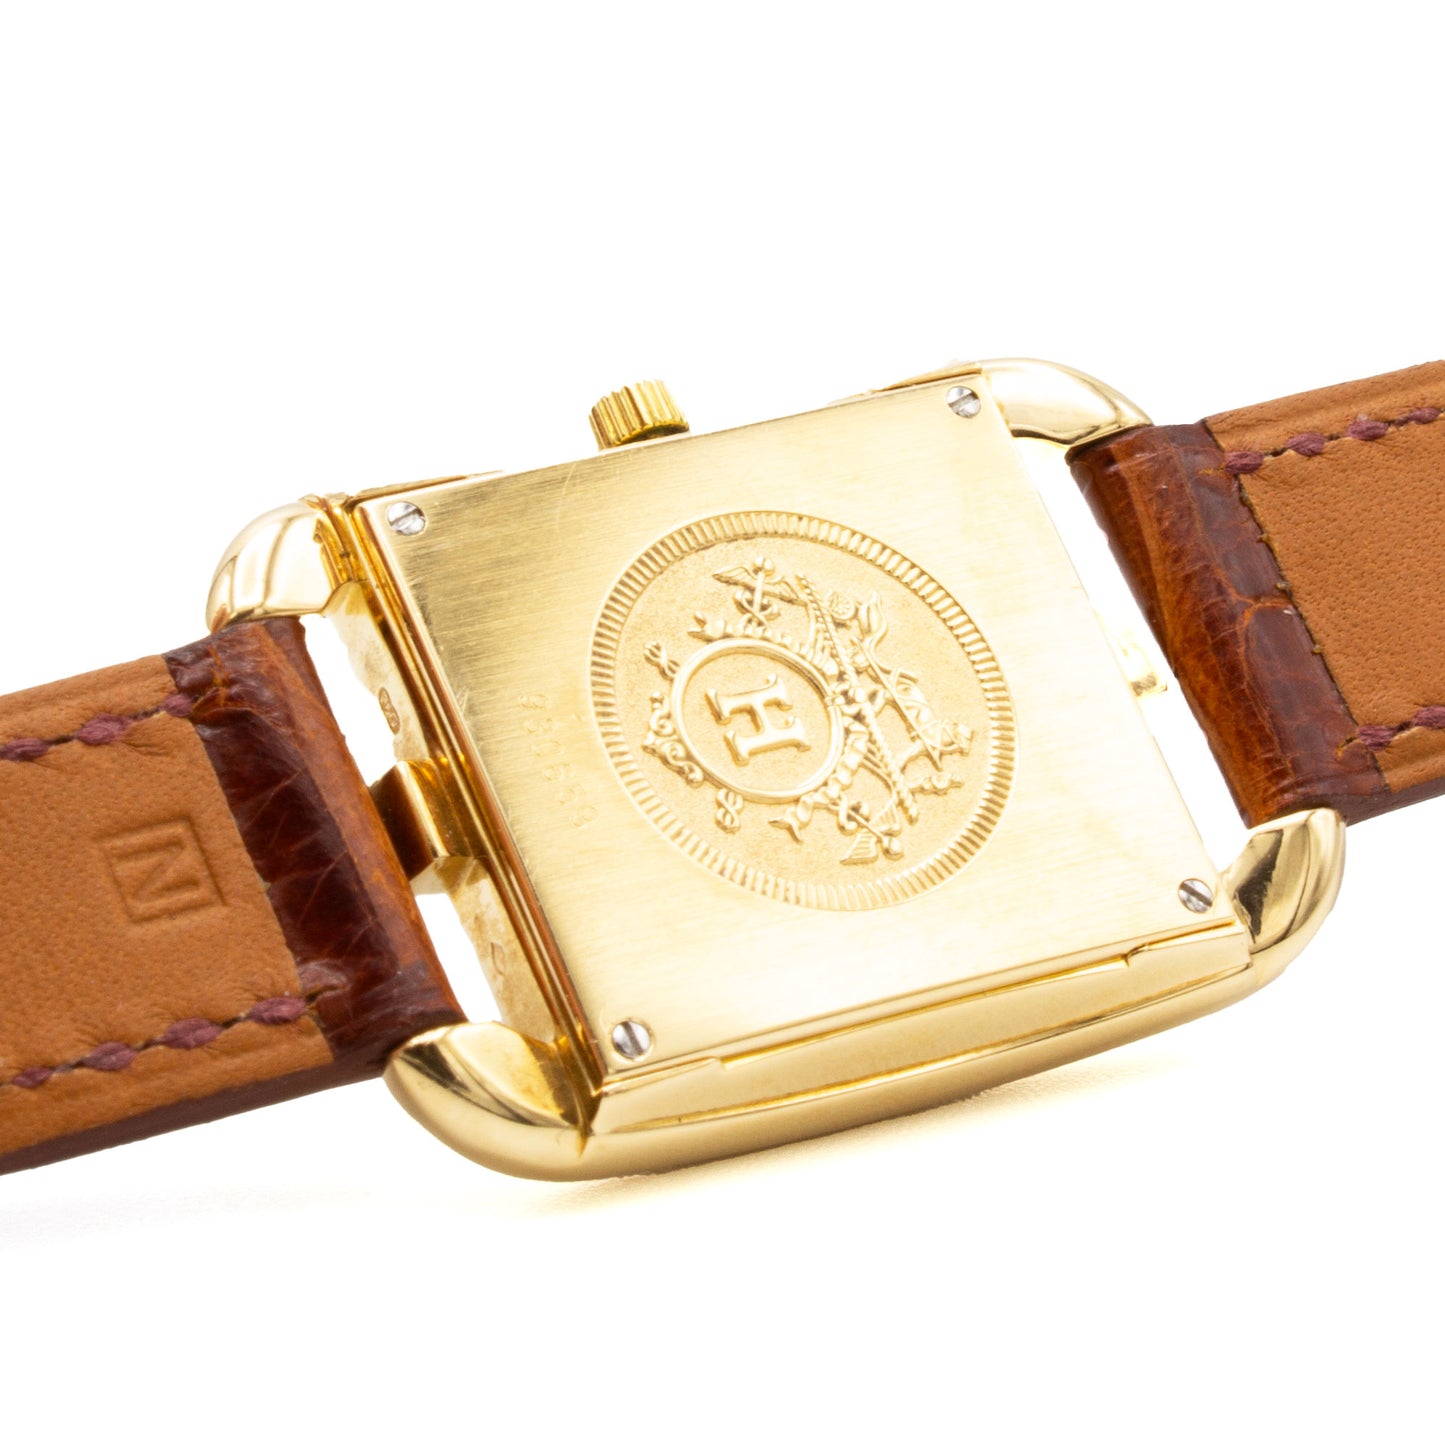 Hermès Cape Cod 18K watch